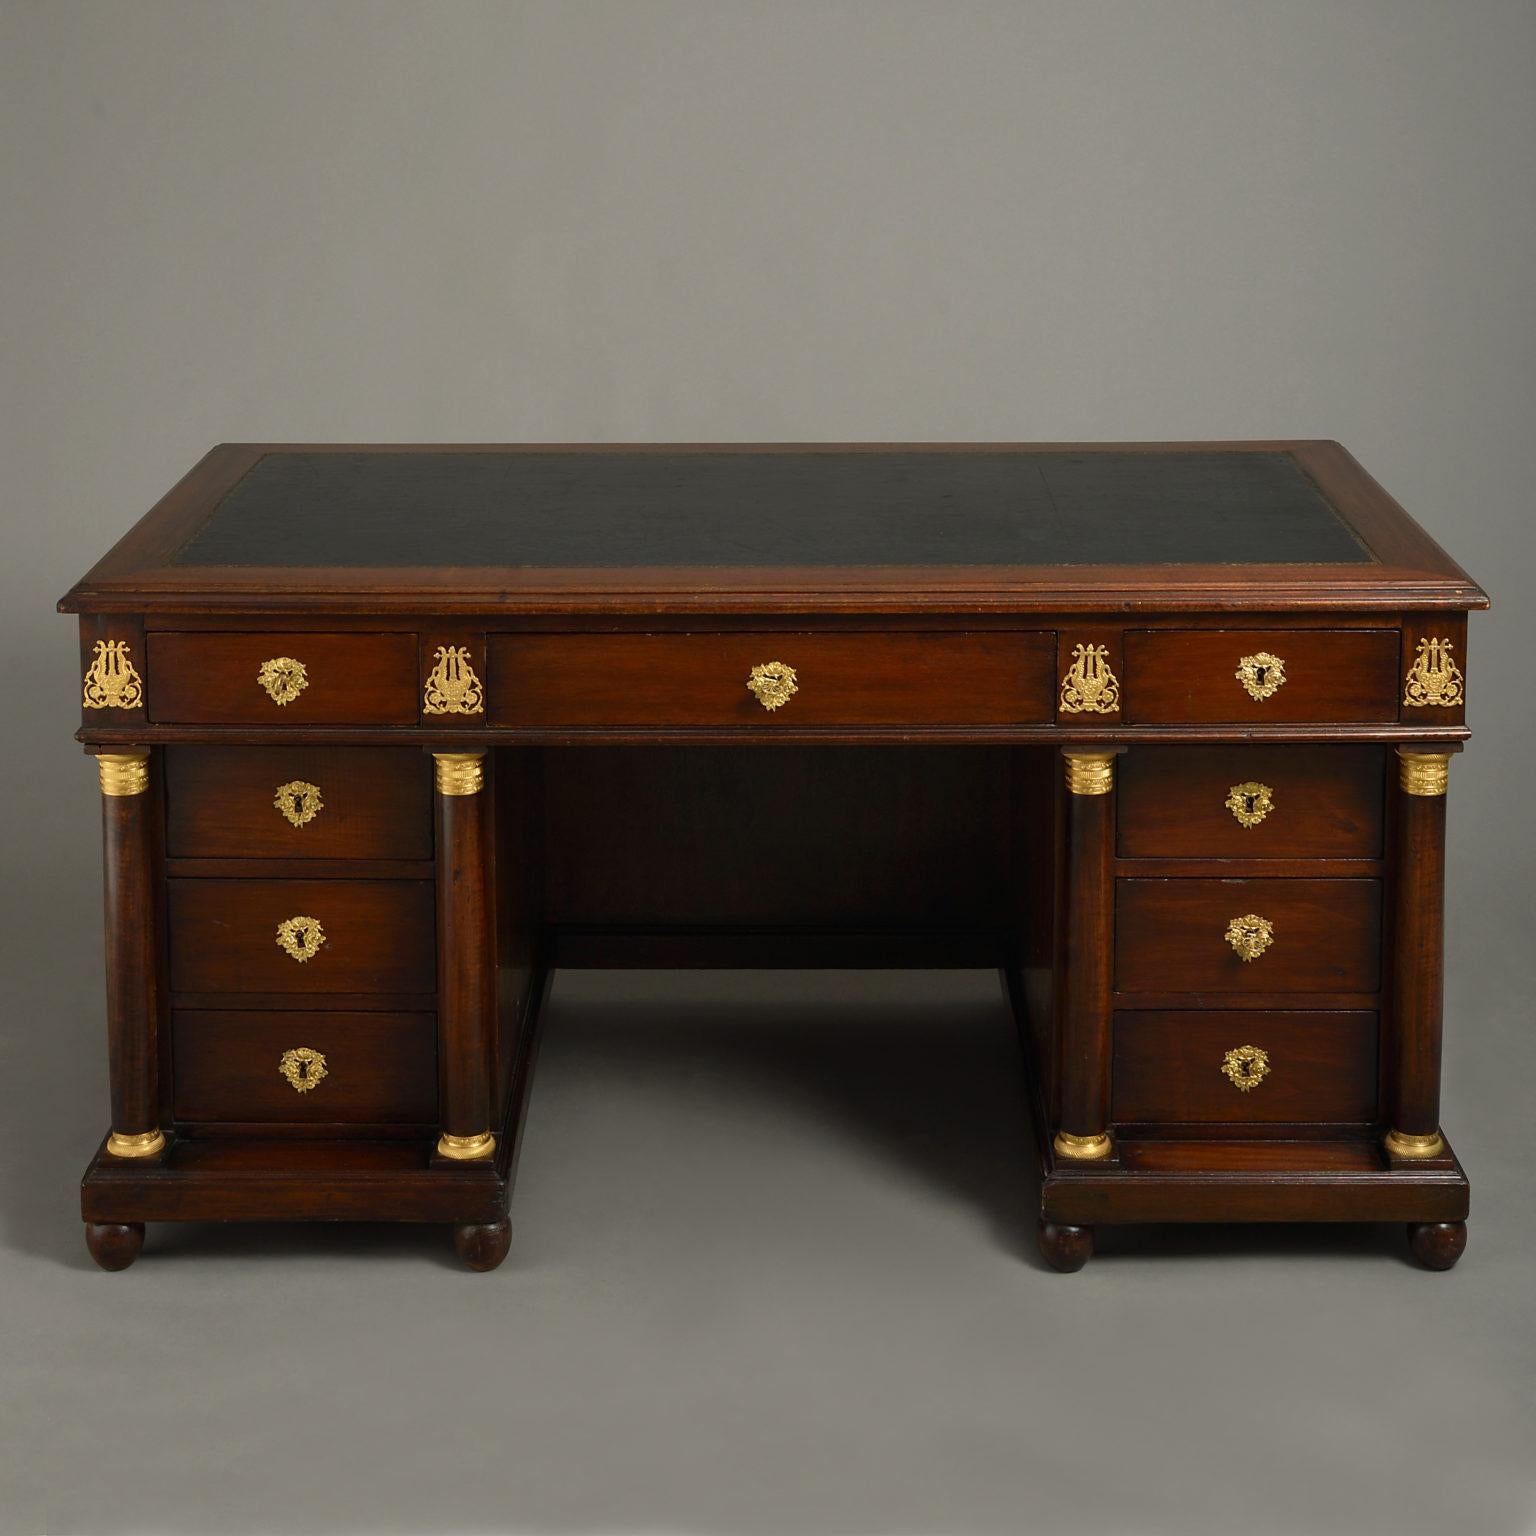 Polished Empire Style Mahogany and Gilt Brass Desk